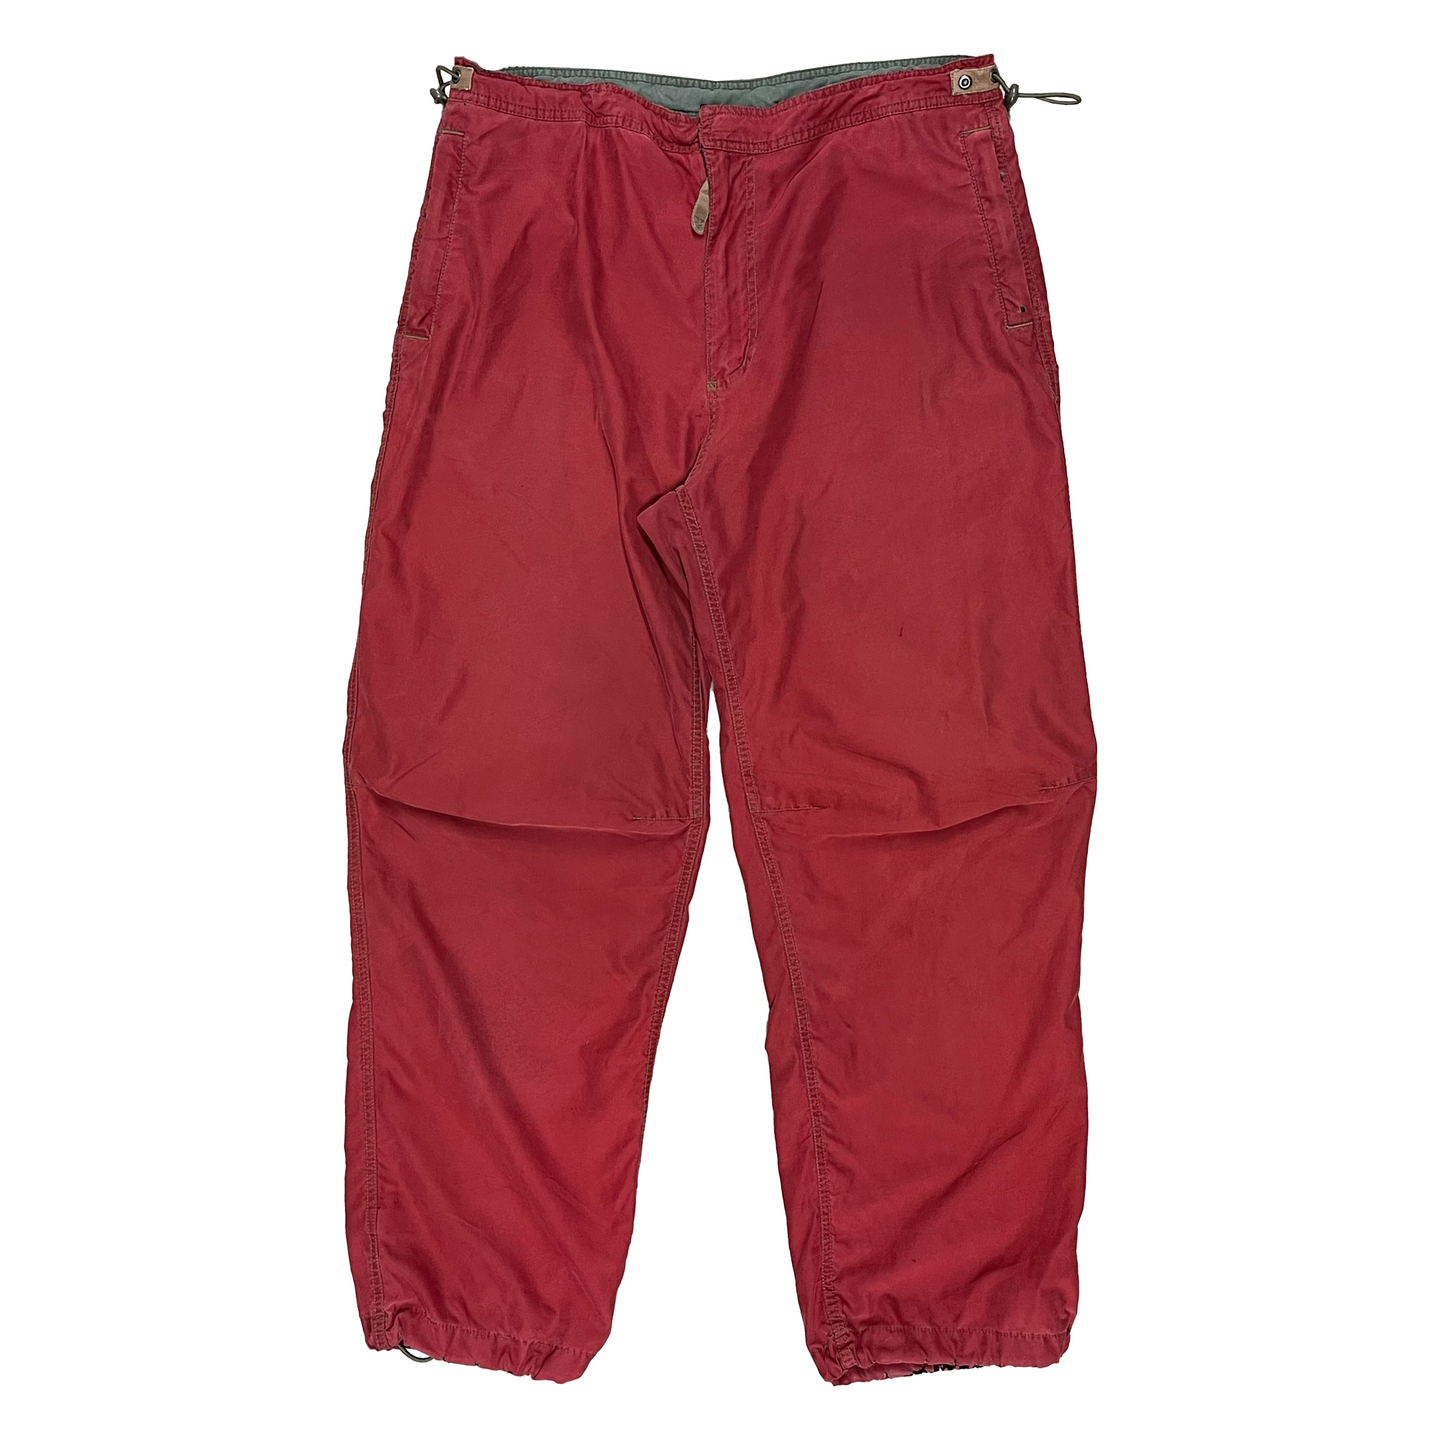 Vintage GAP Trousers (Red)